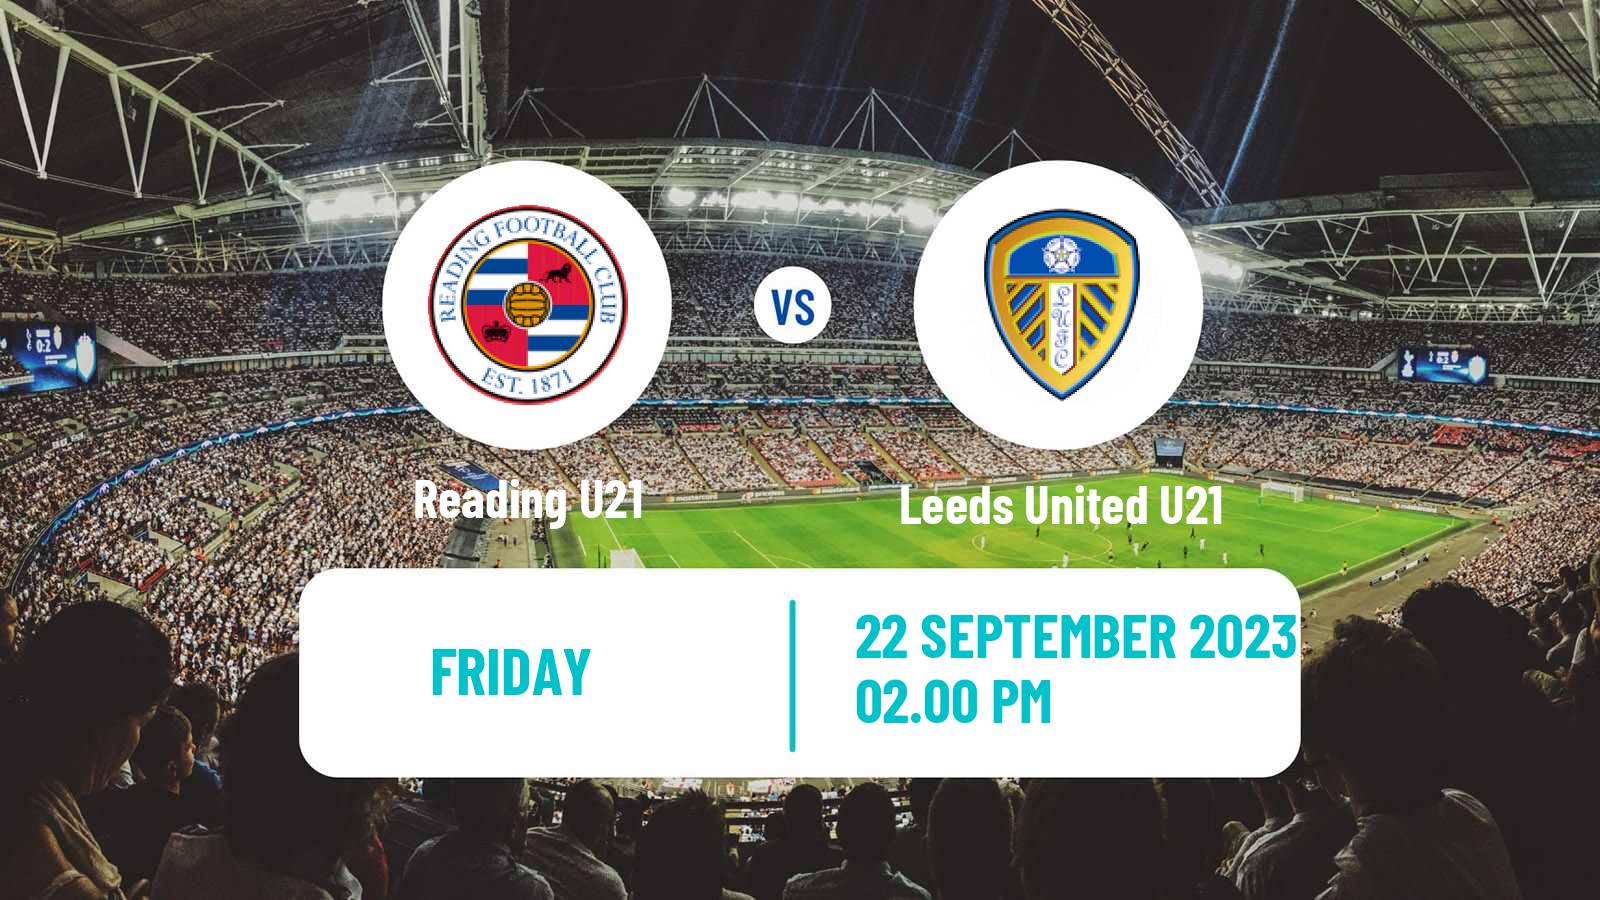 Soccer English Premier League 2 Reading U21 - Leeds United U21